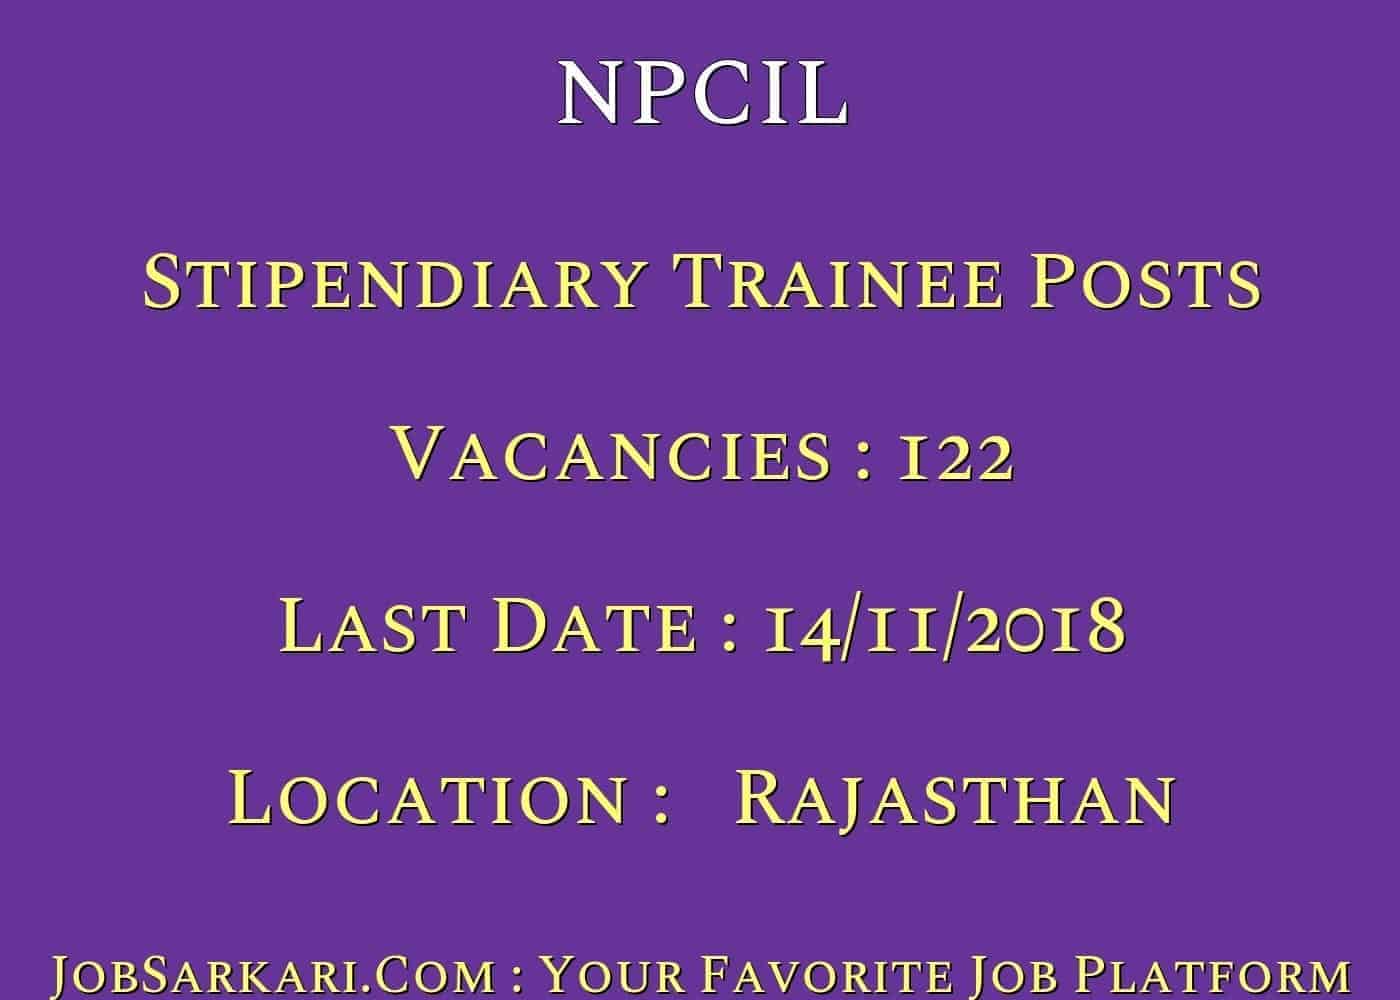 NPCIL Recruitment 2018 For Stipendiary Trainee Posts